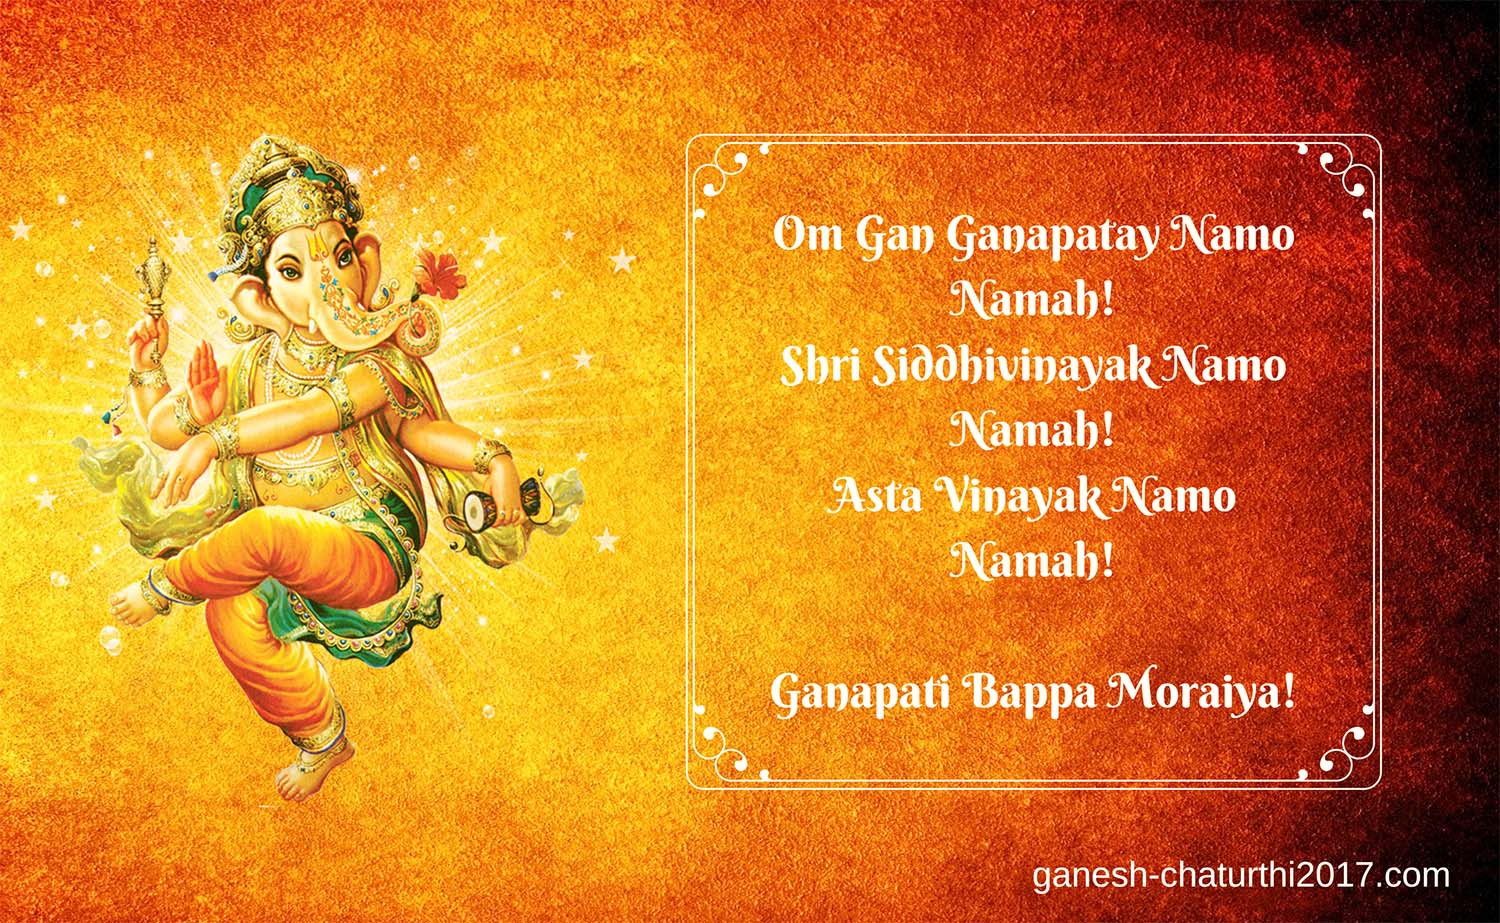 Ganesha Festival wishes in English